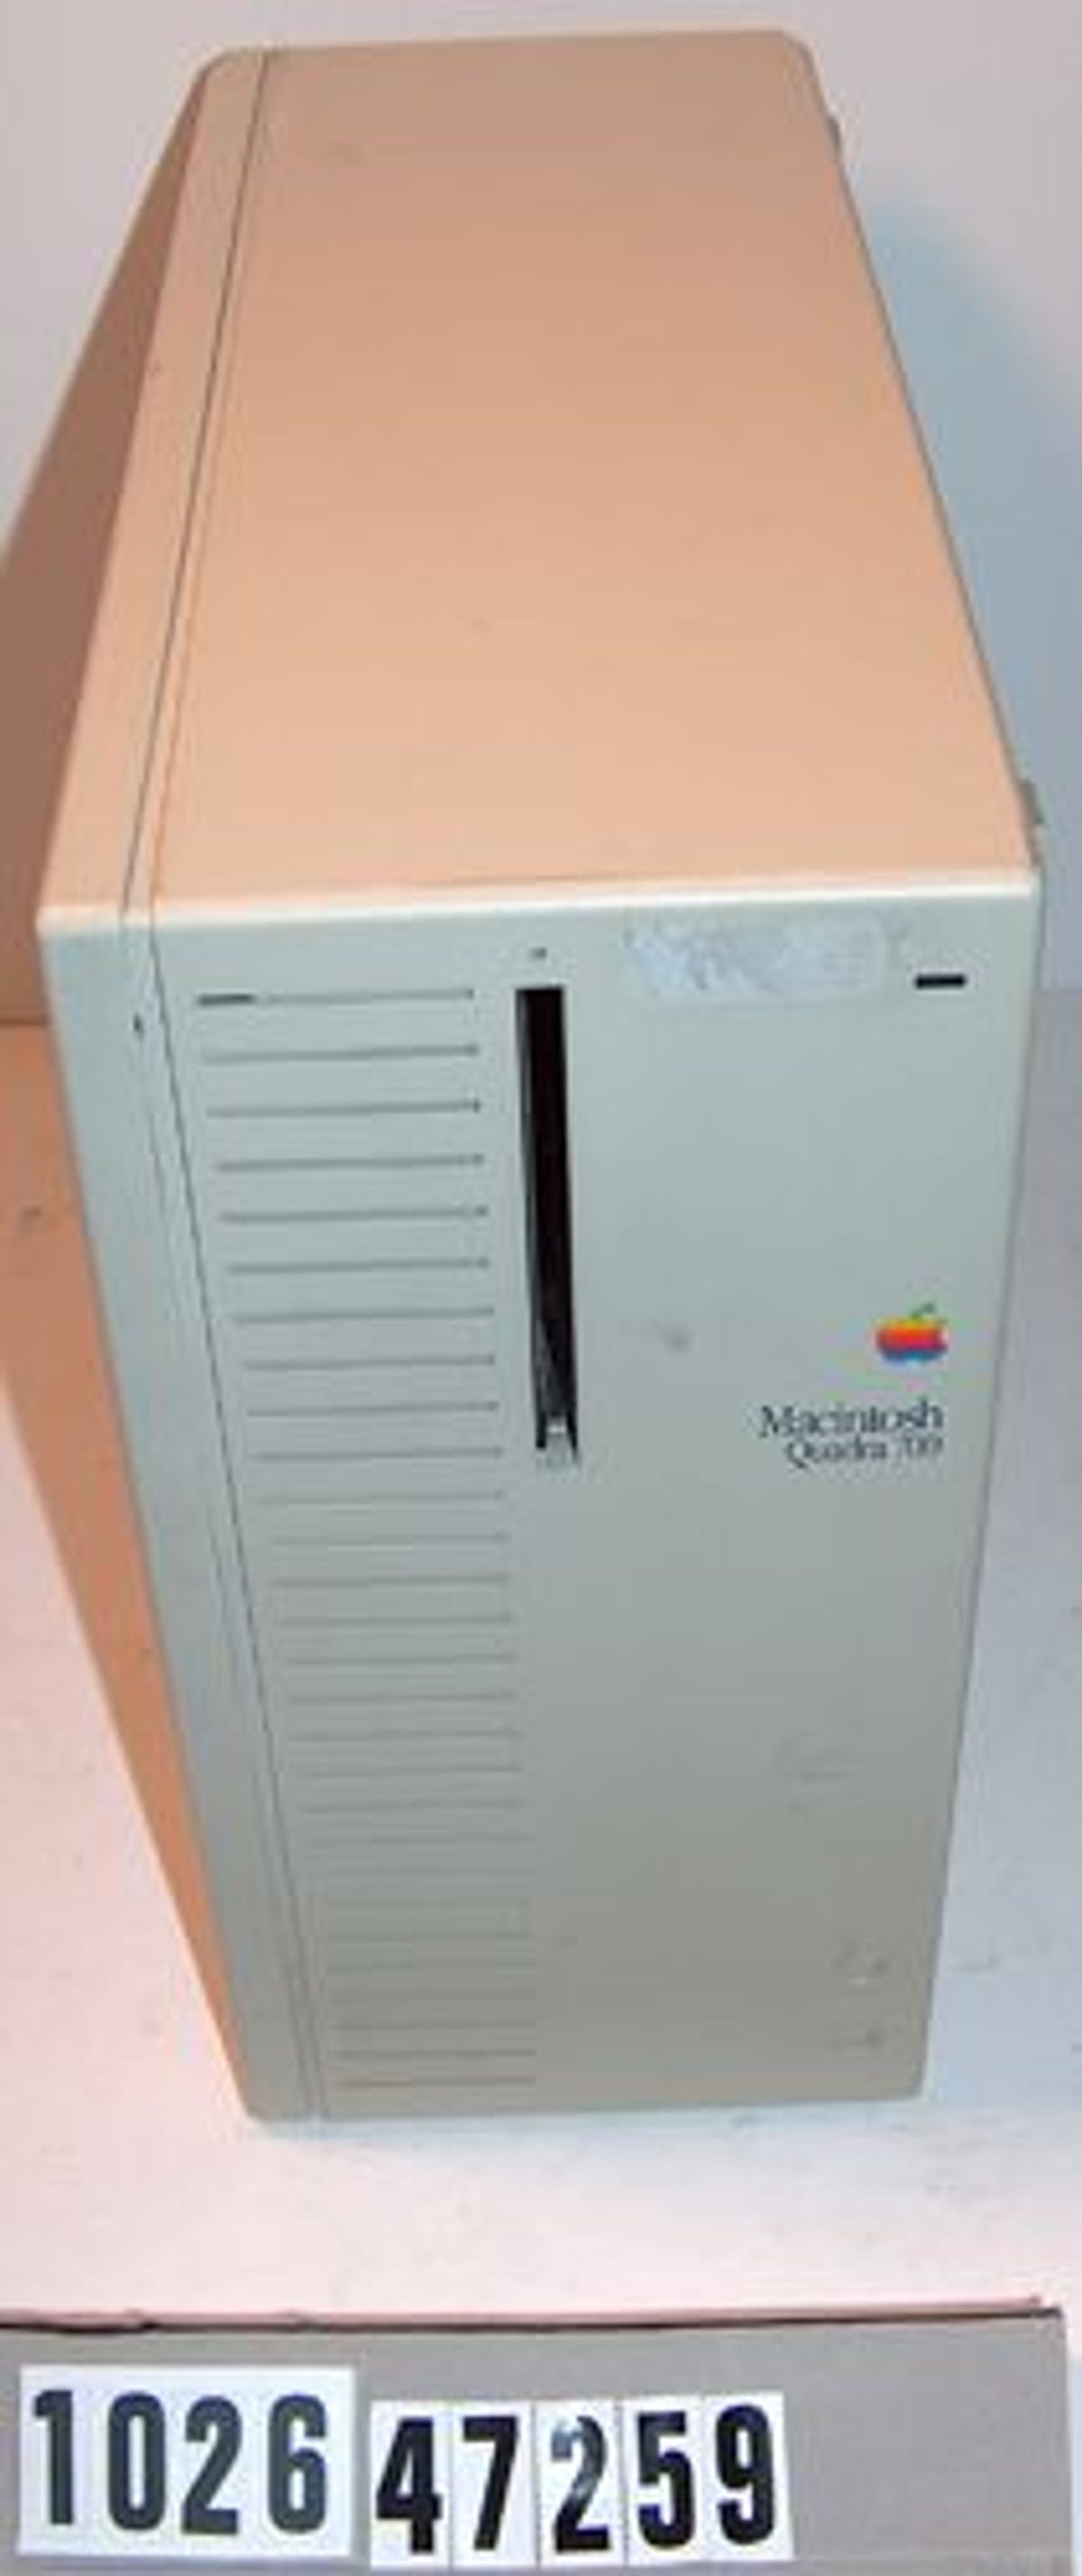 Macintosh_Quadra_700.jpg